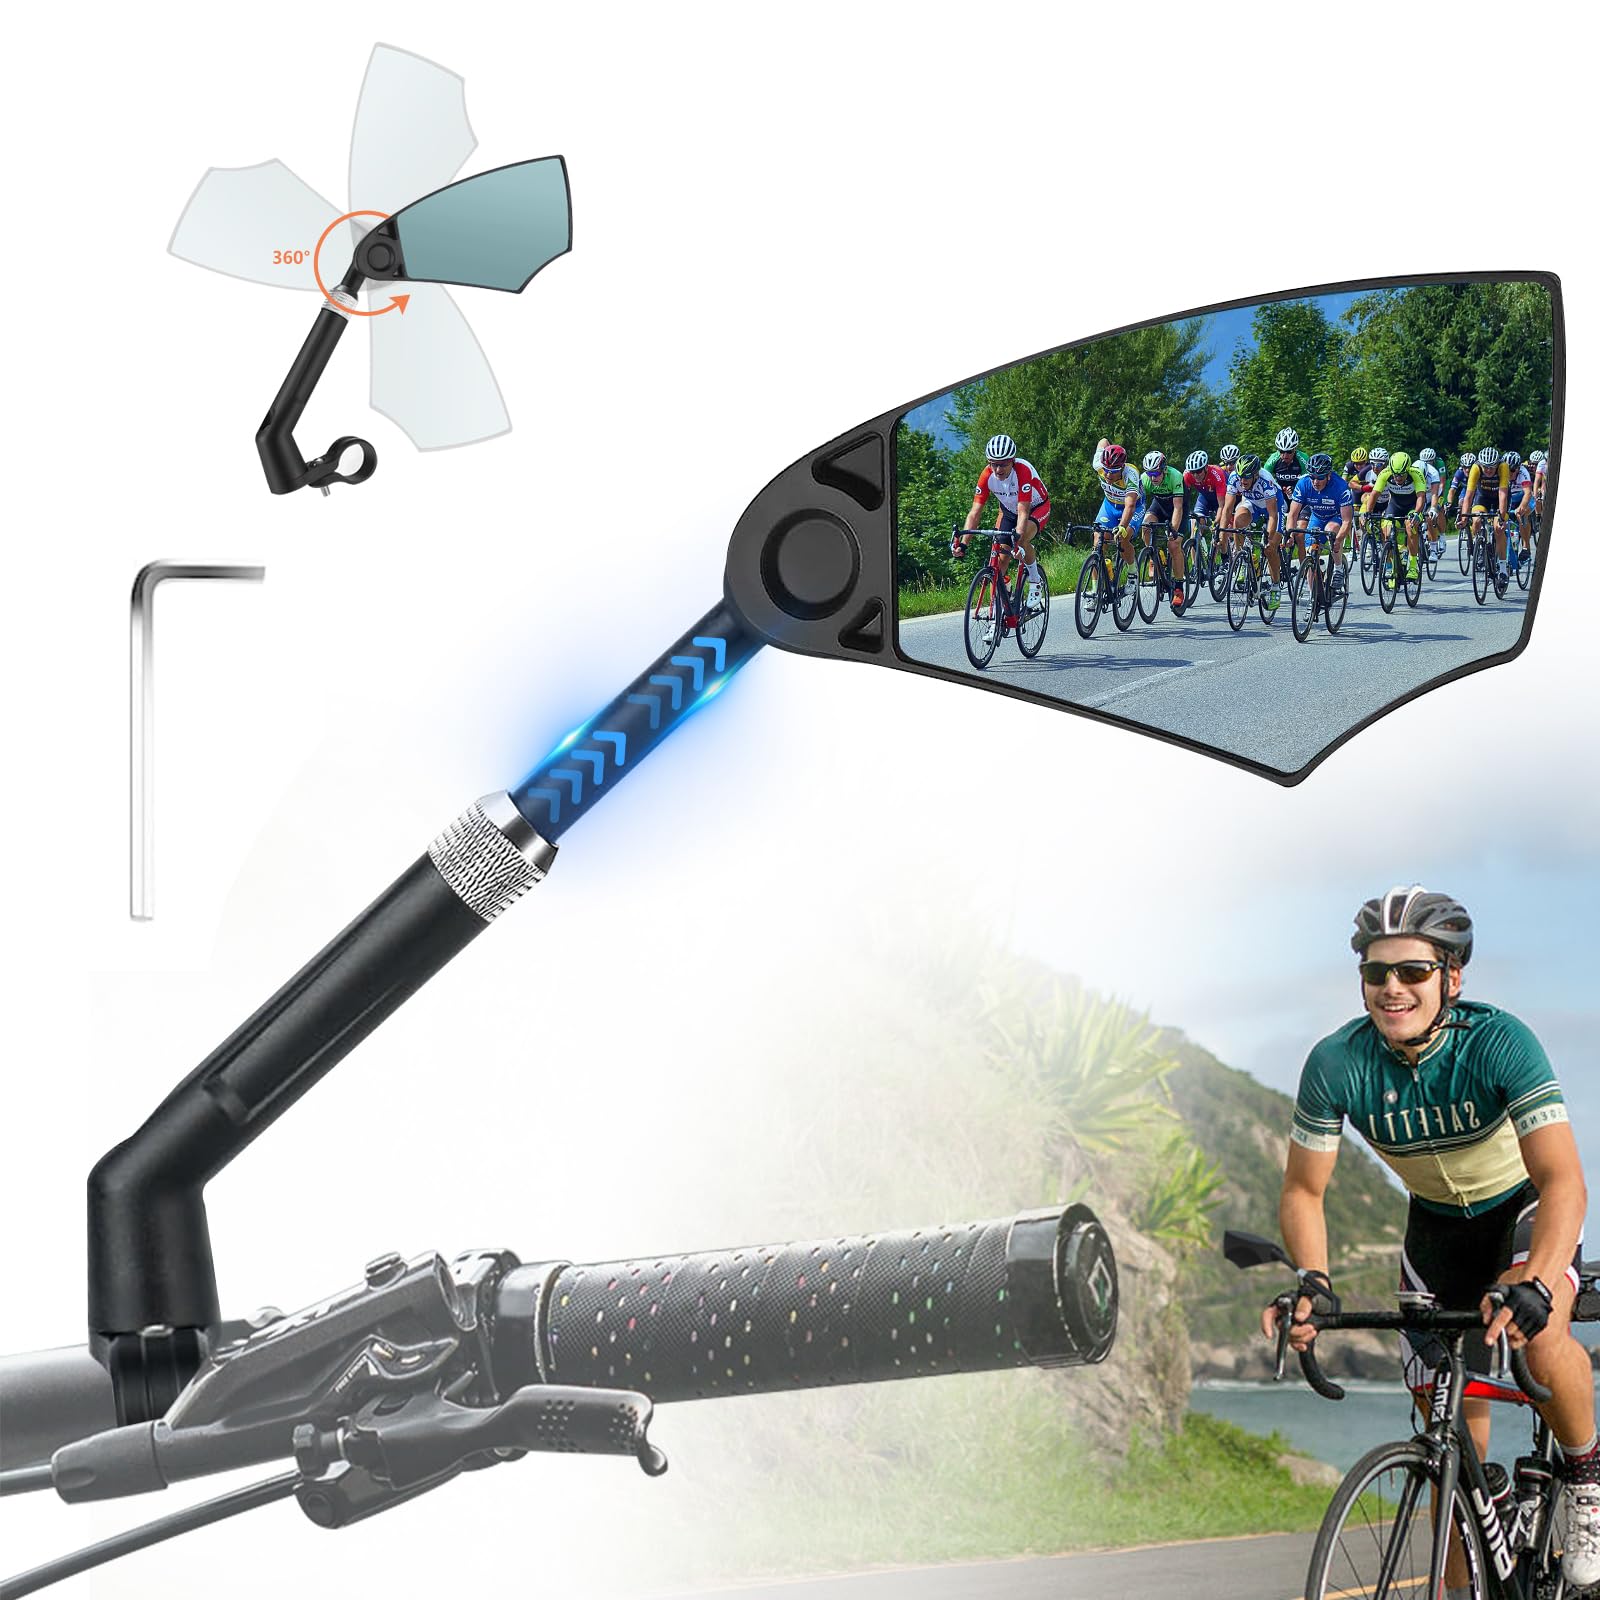 Fahrradspiegel,Dehnbar Rückspiegel Fahrrad,360° Drehbarer Fahrrad Spiegel für Rennrad MTB e-scooter e-bike,20-23mm Lenker,Blaulichtglas,Geringe Blendung (Rechts) von xiaowanwan